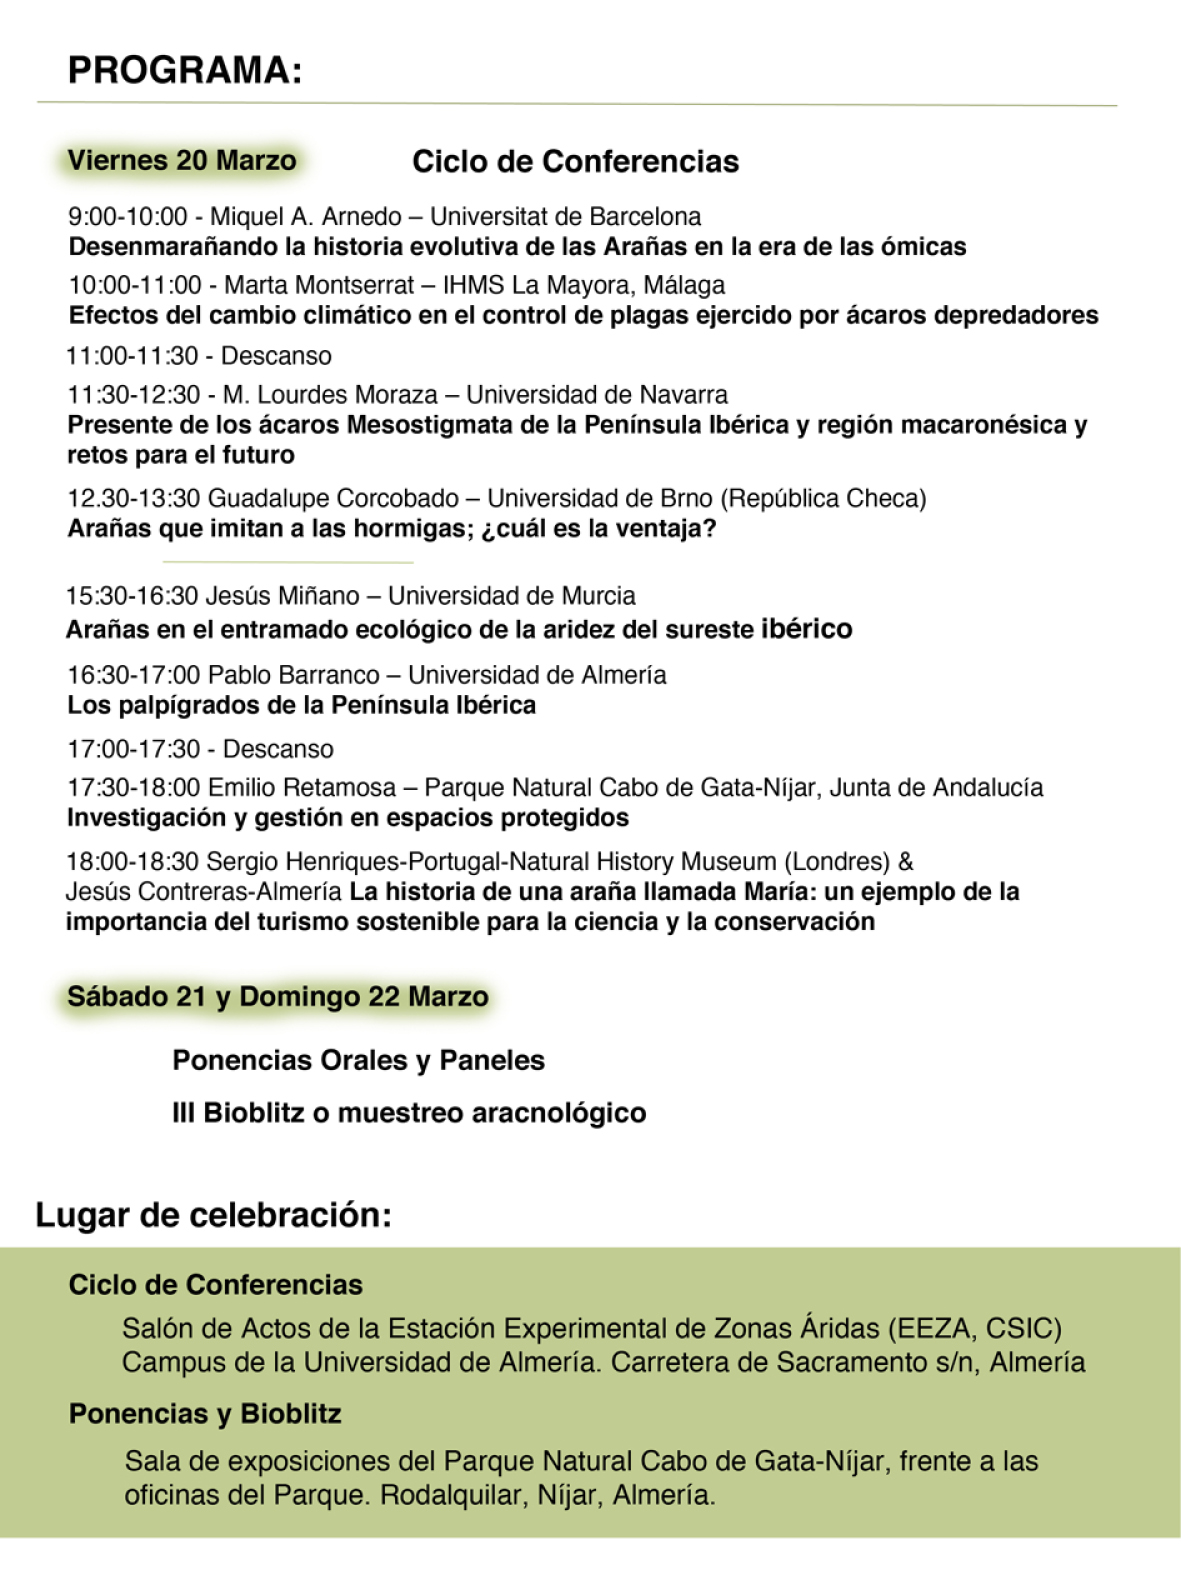 XV Jornadas del Grupo de Aracnología en Almería. Programa.